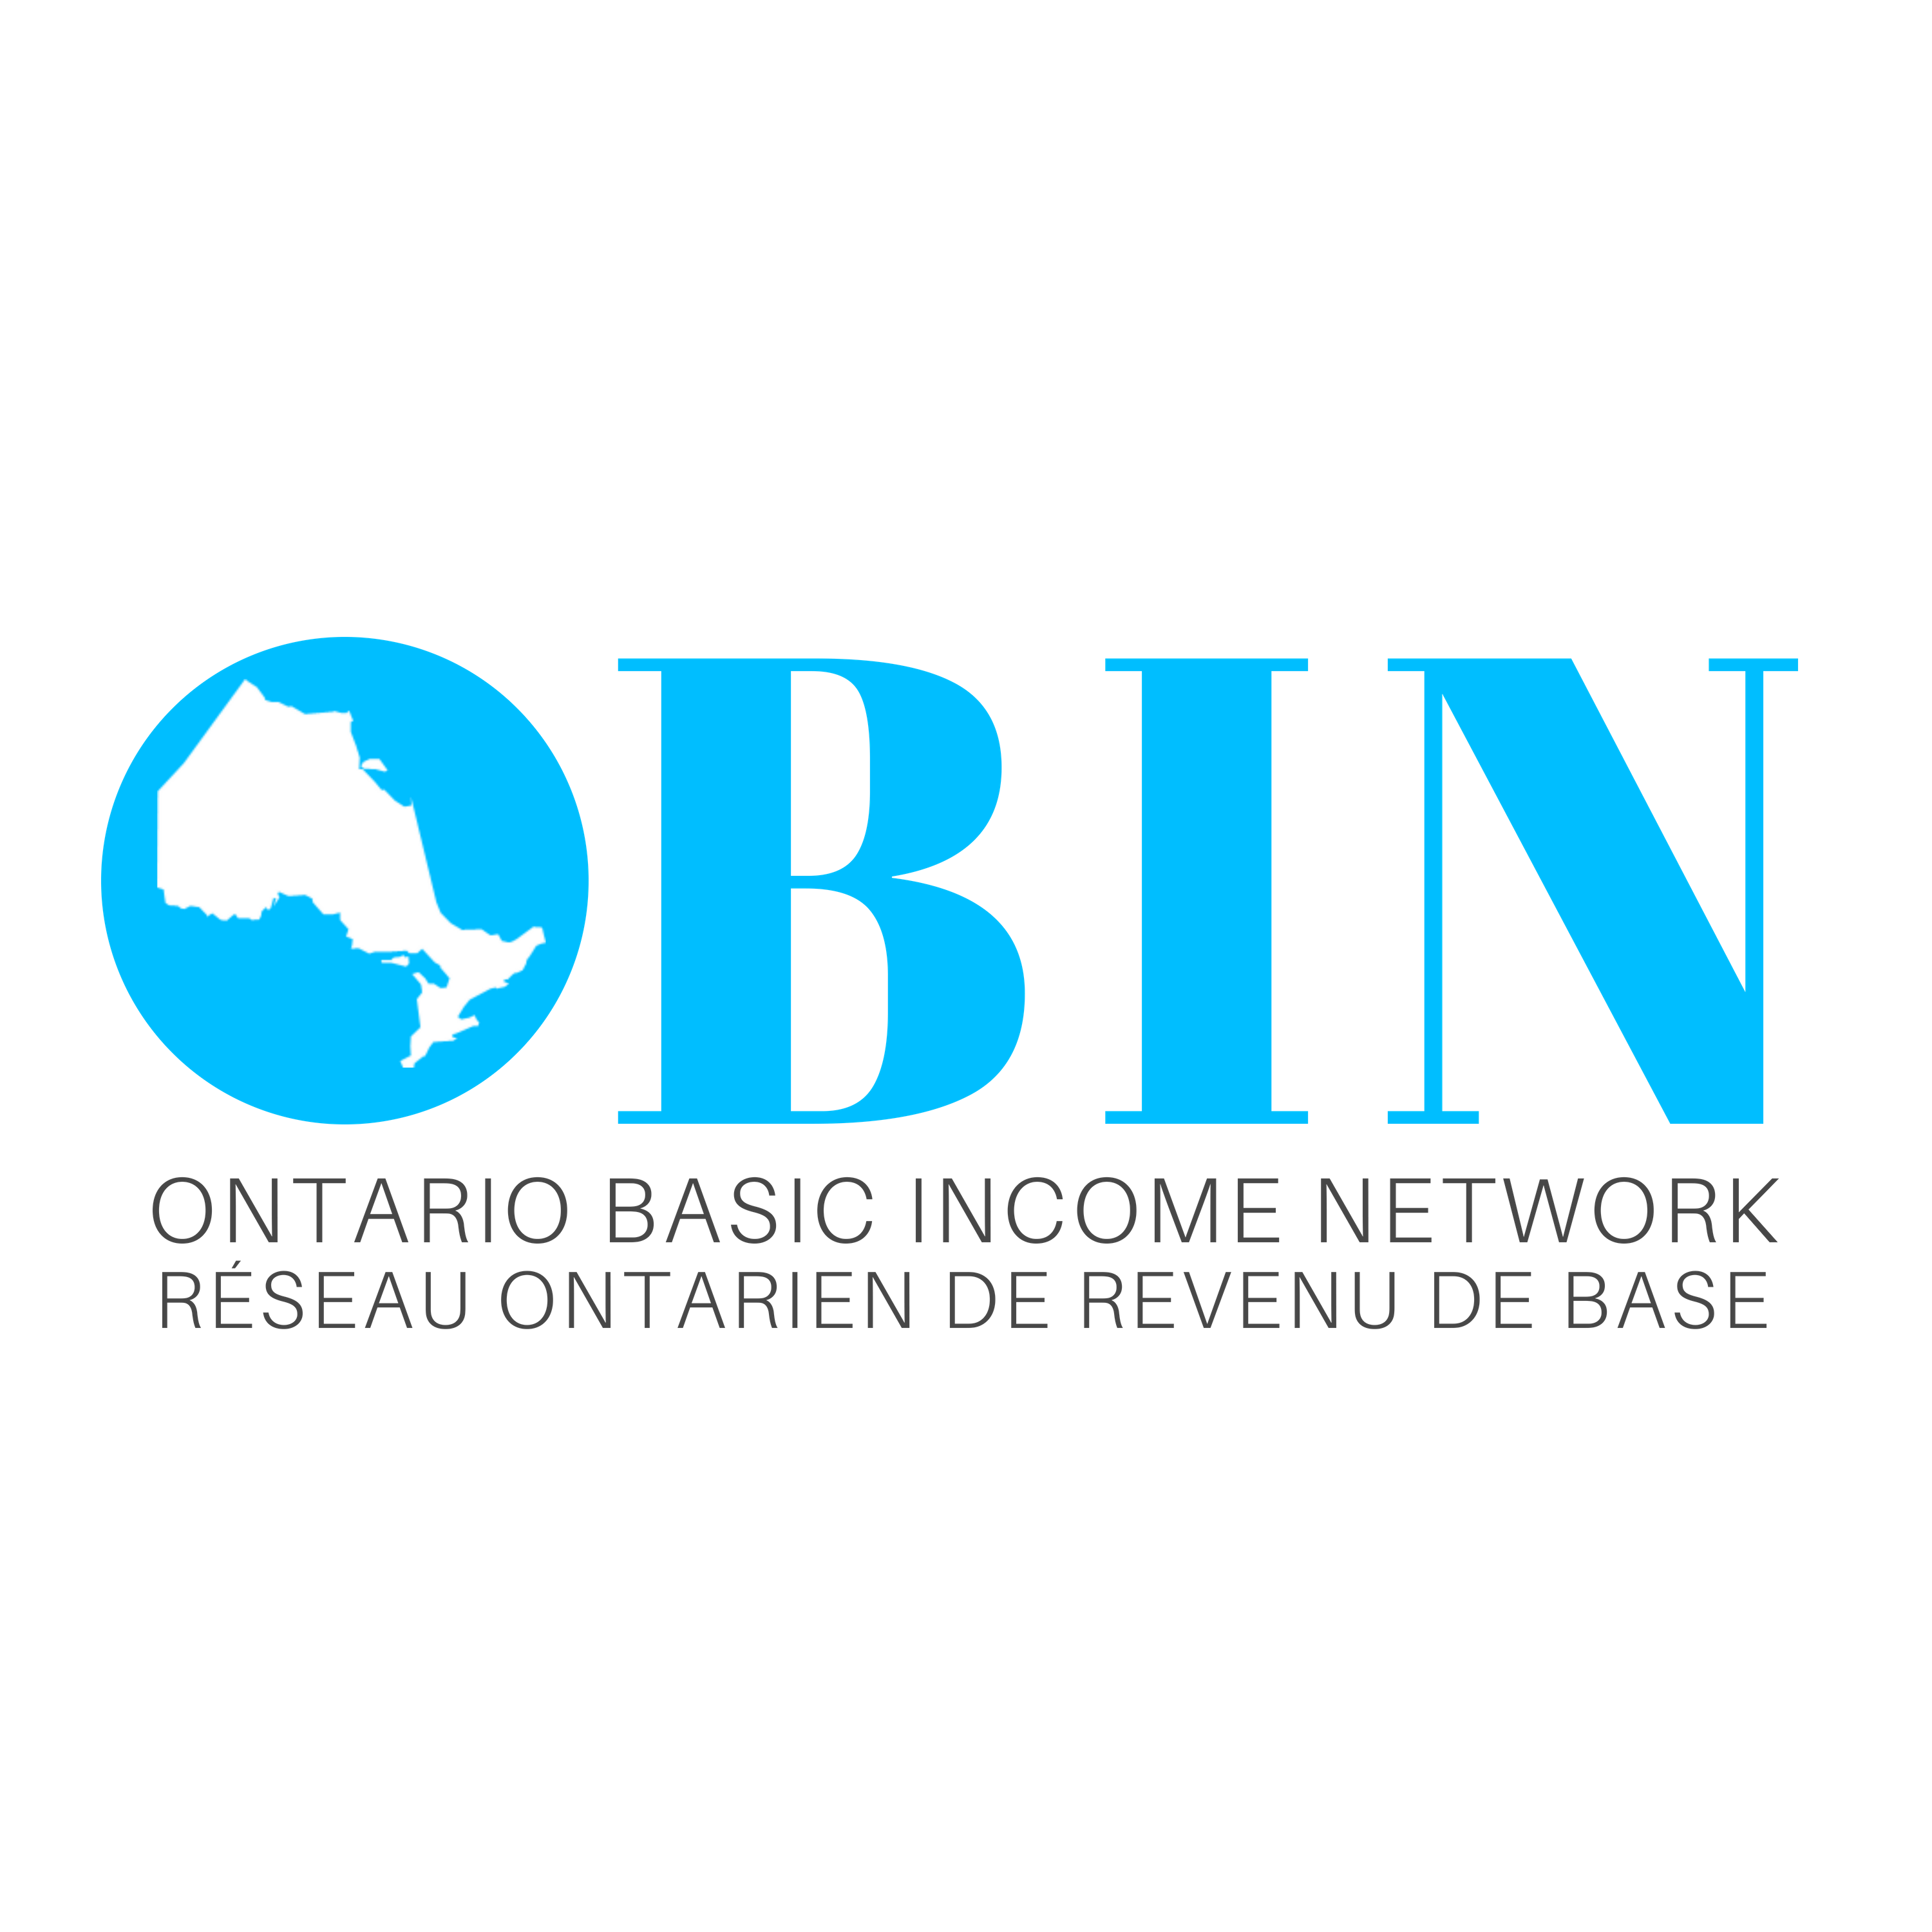 Ontario Basic Income Network